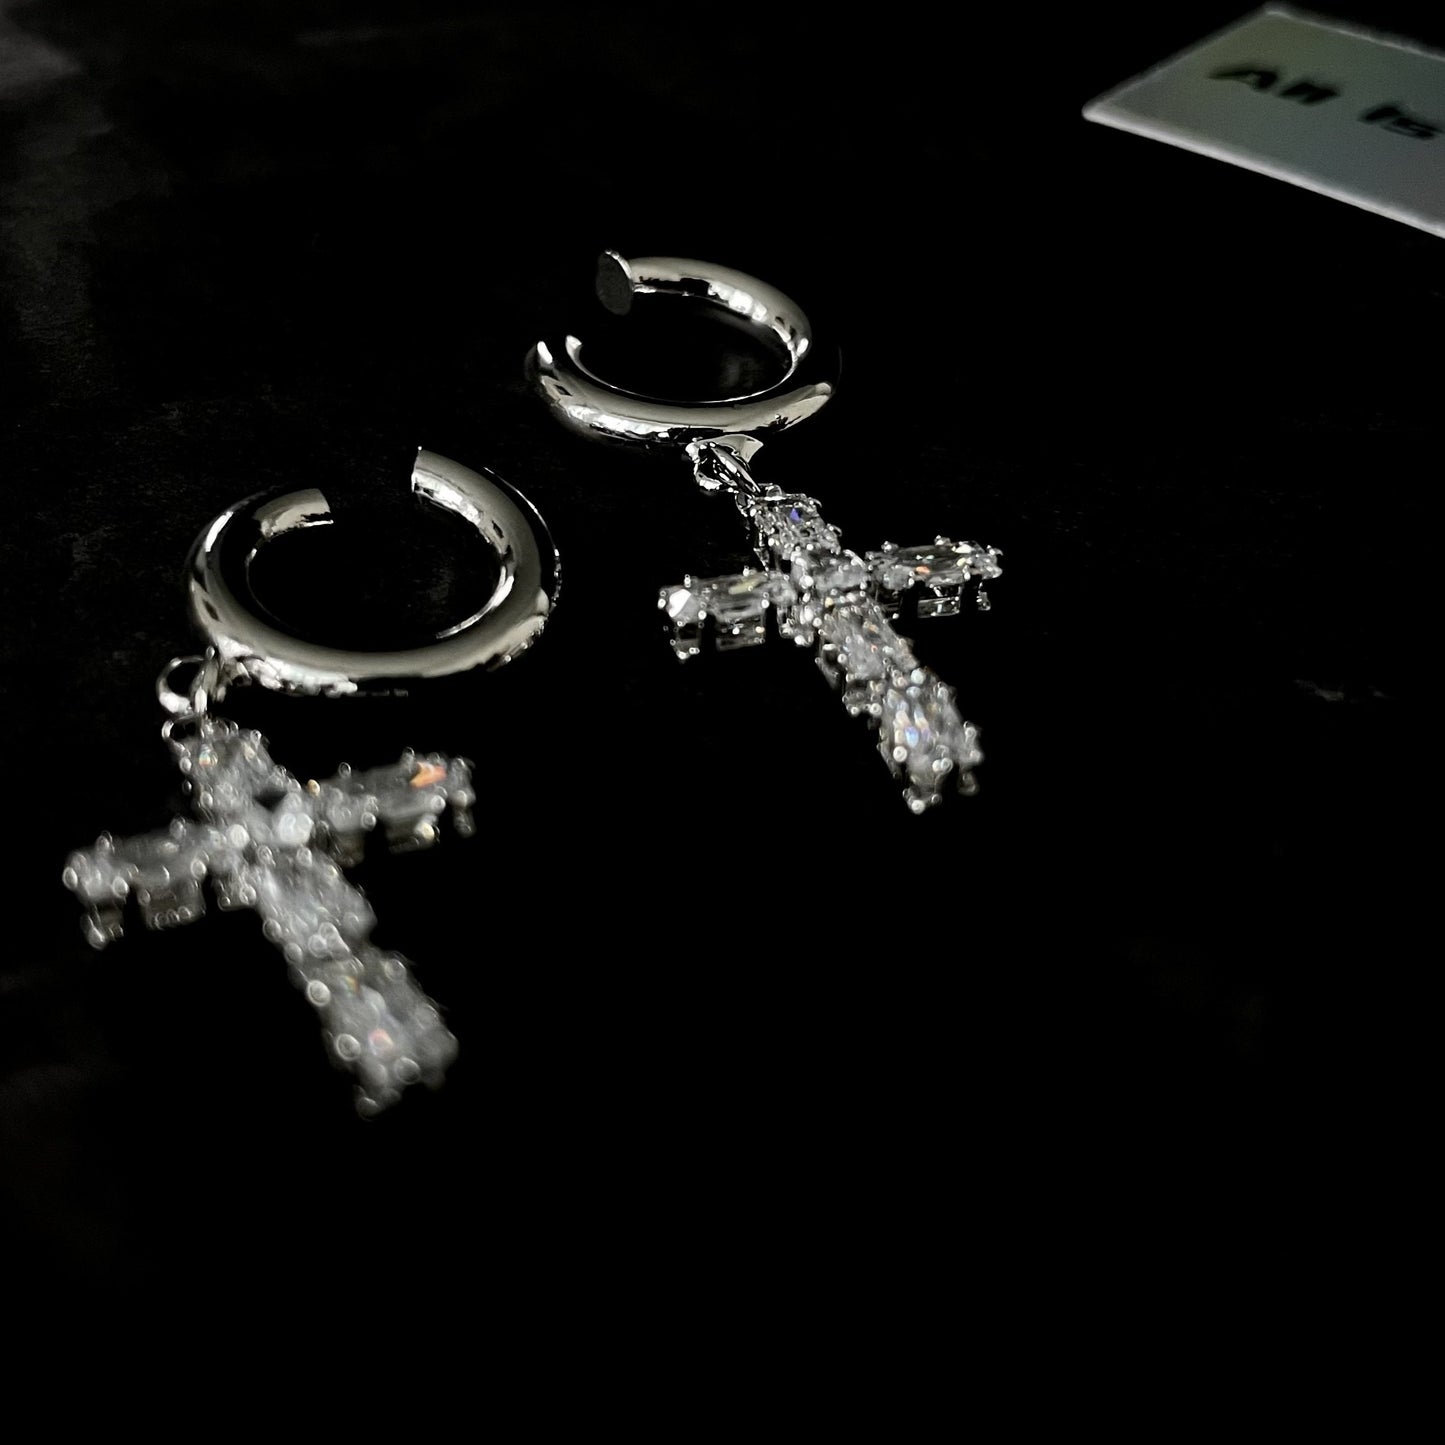 Crystal clear cross earring cuffs